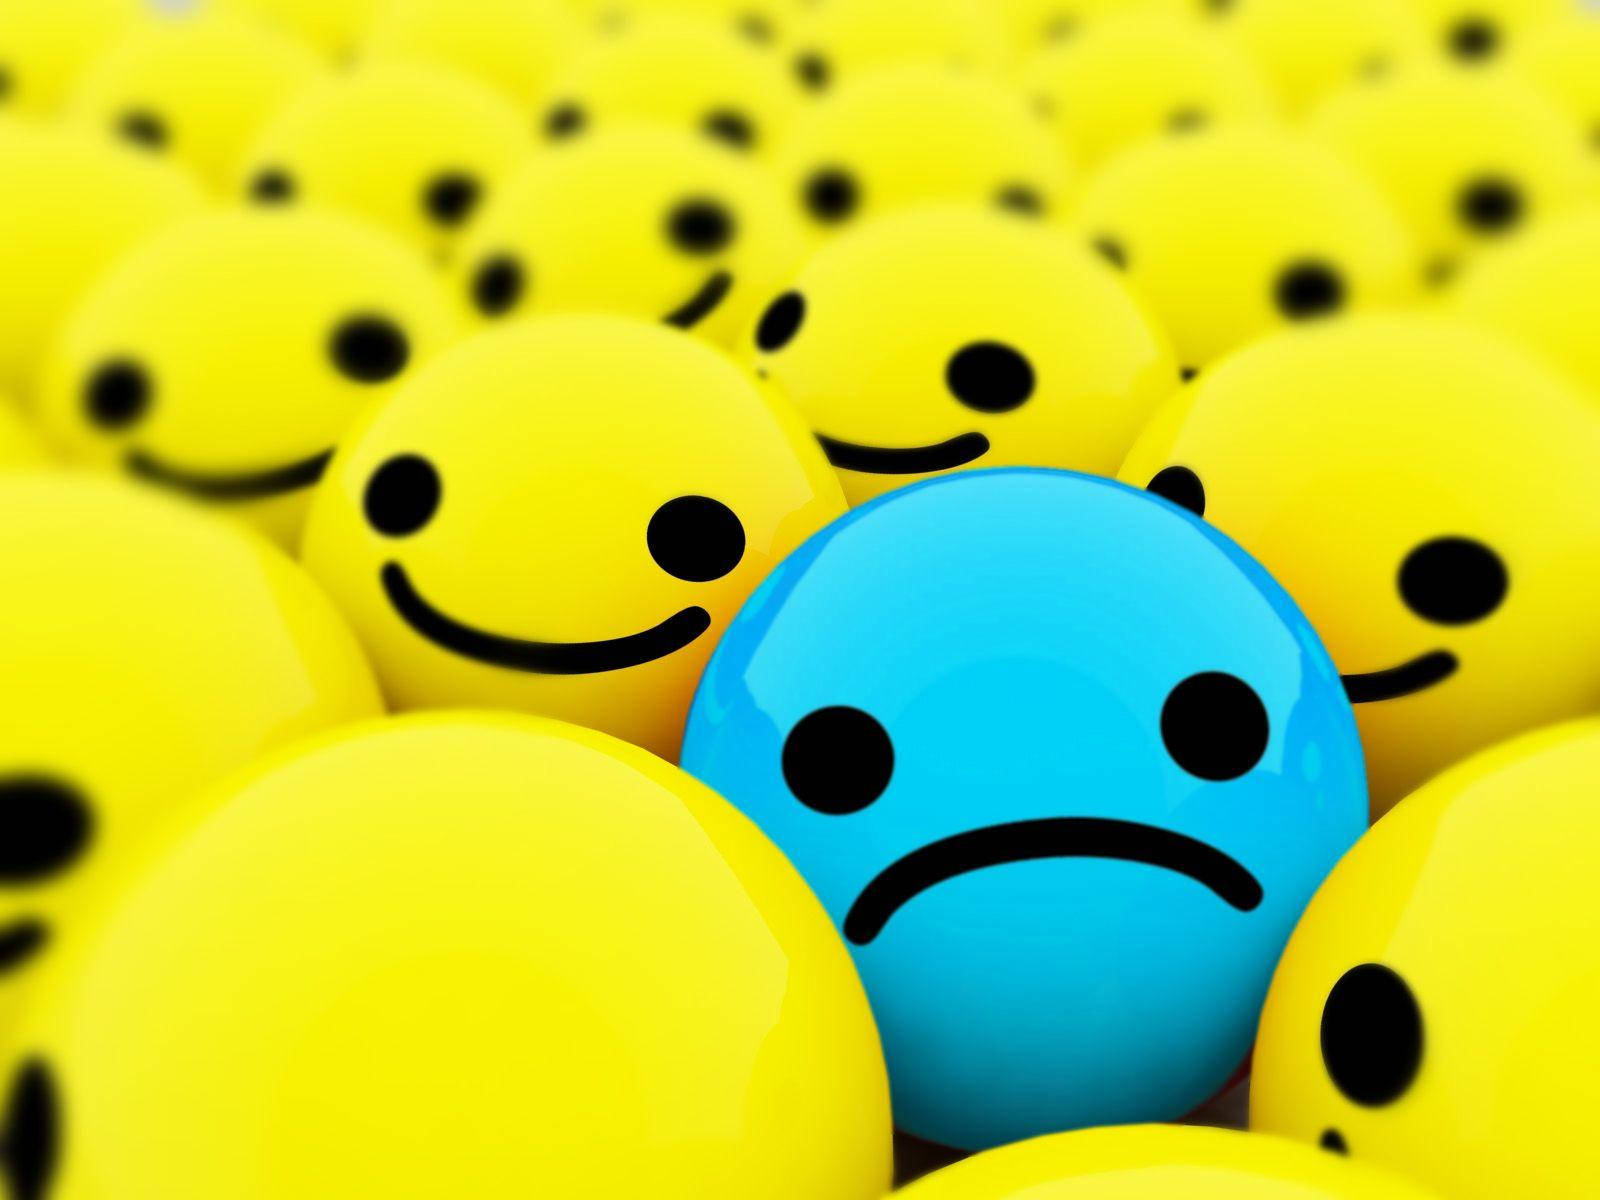 Free Sad Emoji Wallpaper Downloads, [100+] Sad Emoji Wallpapers for FREE |  